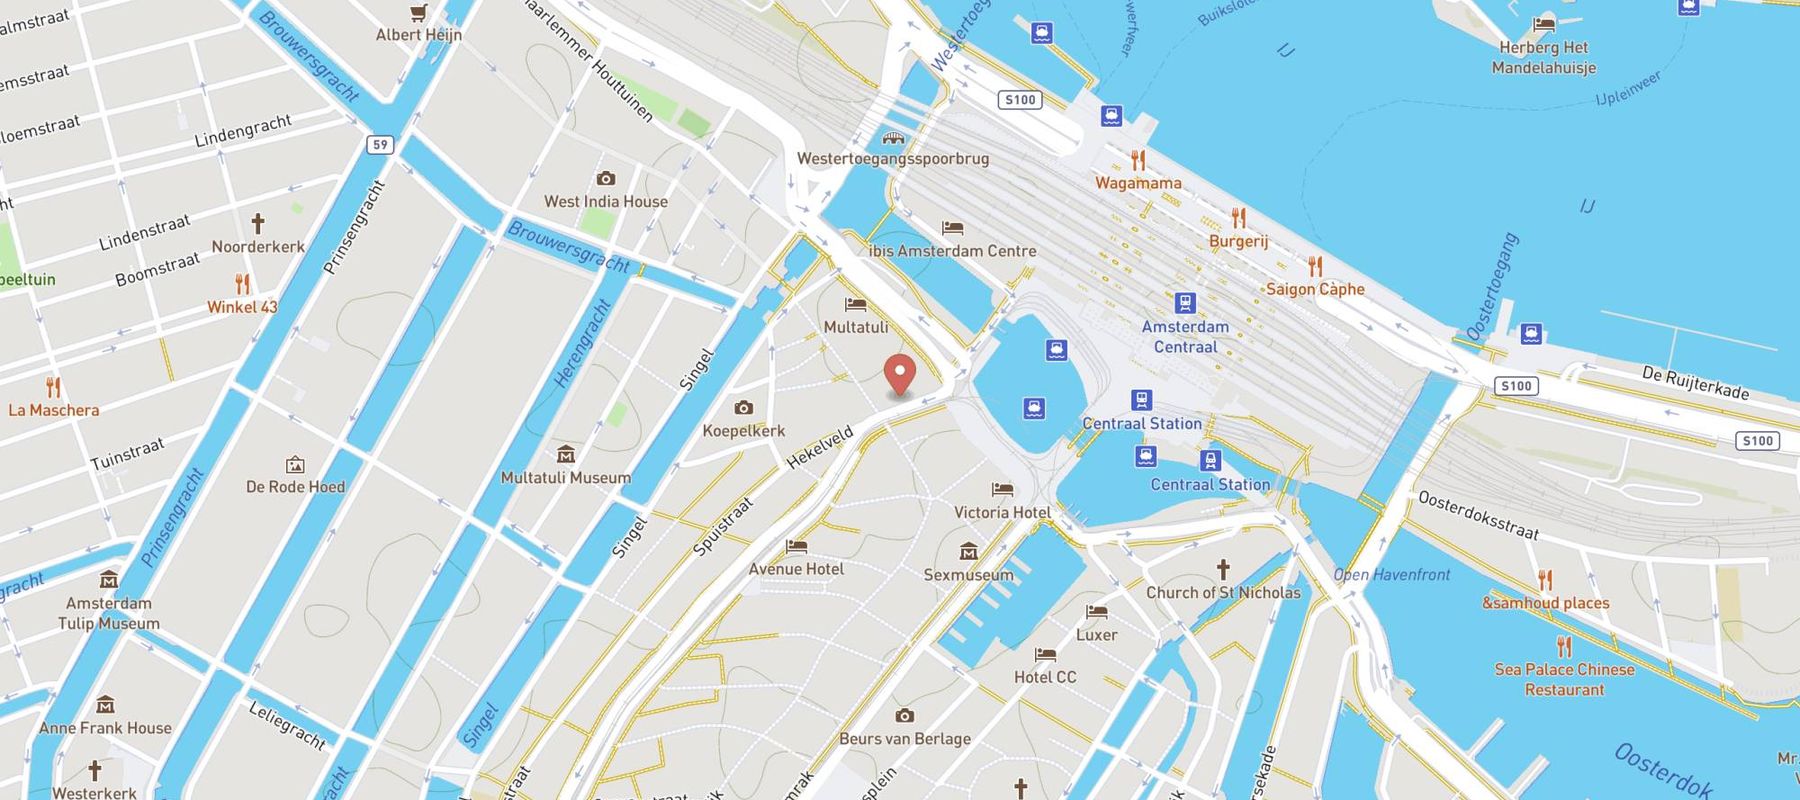 Ph Hotel De Entree Amsterdam Bv map